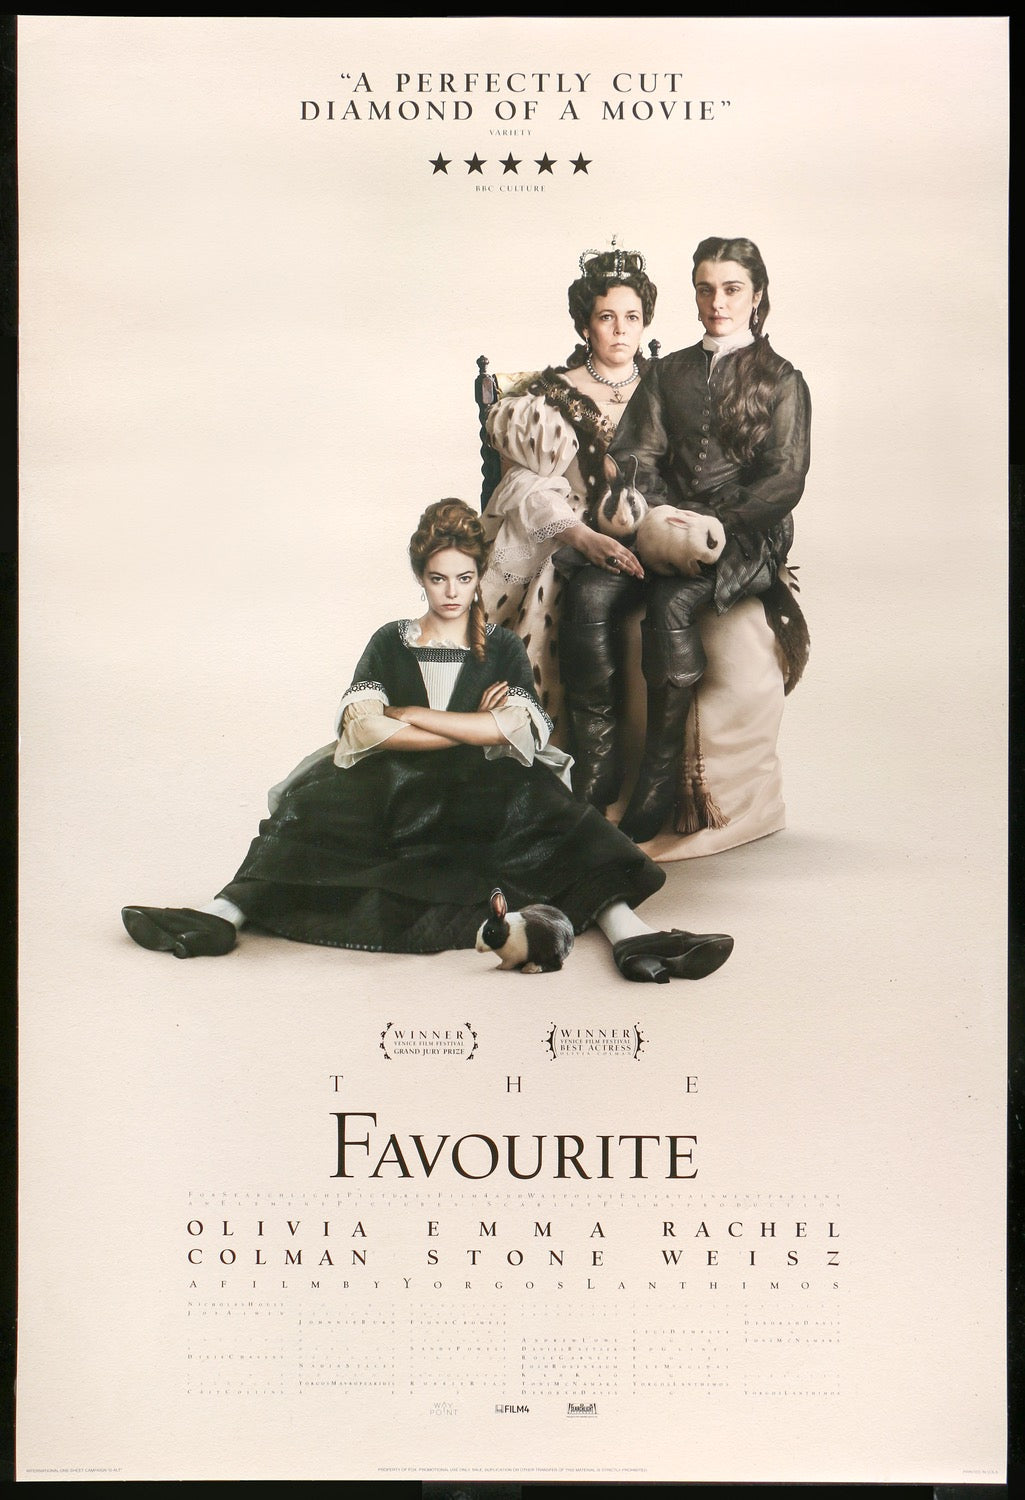 Favourite (2018) original movie poster for sale at Original Film Art